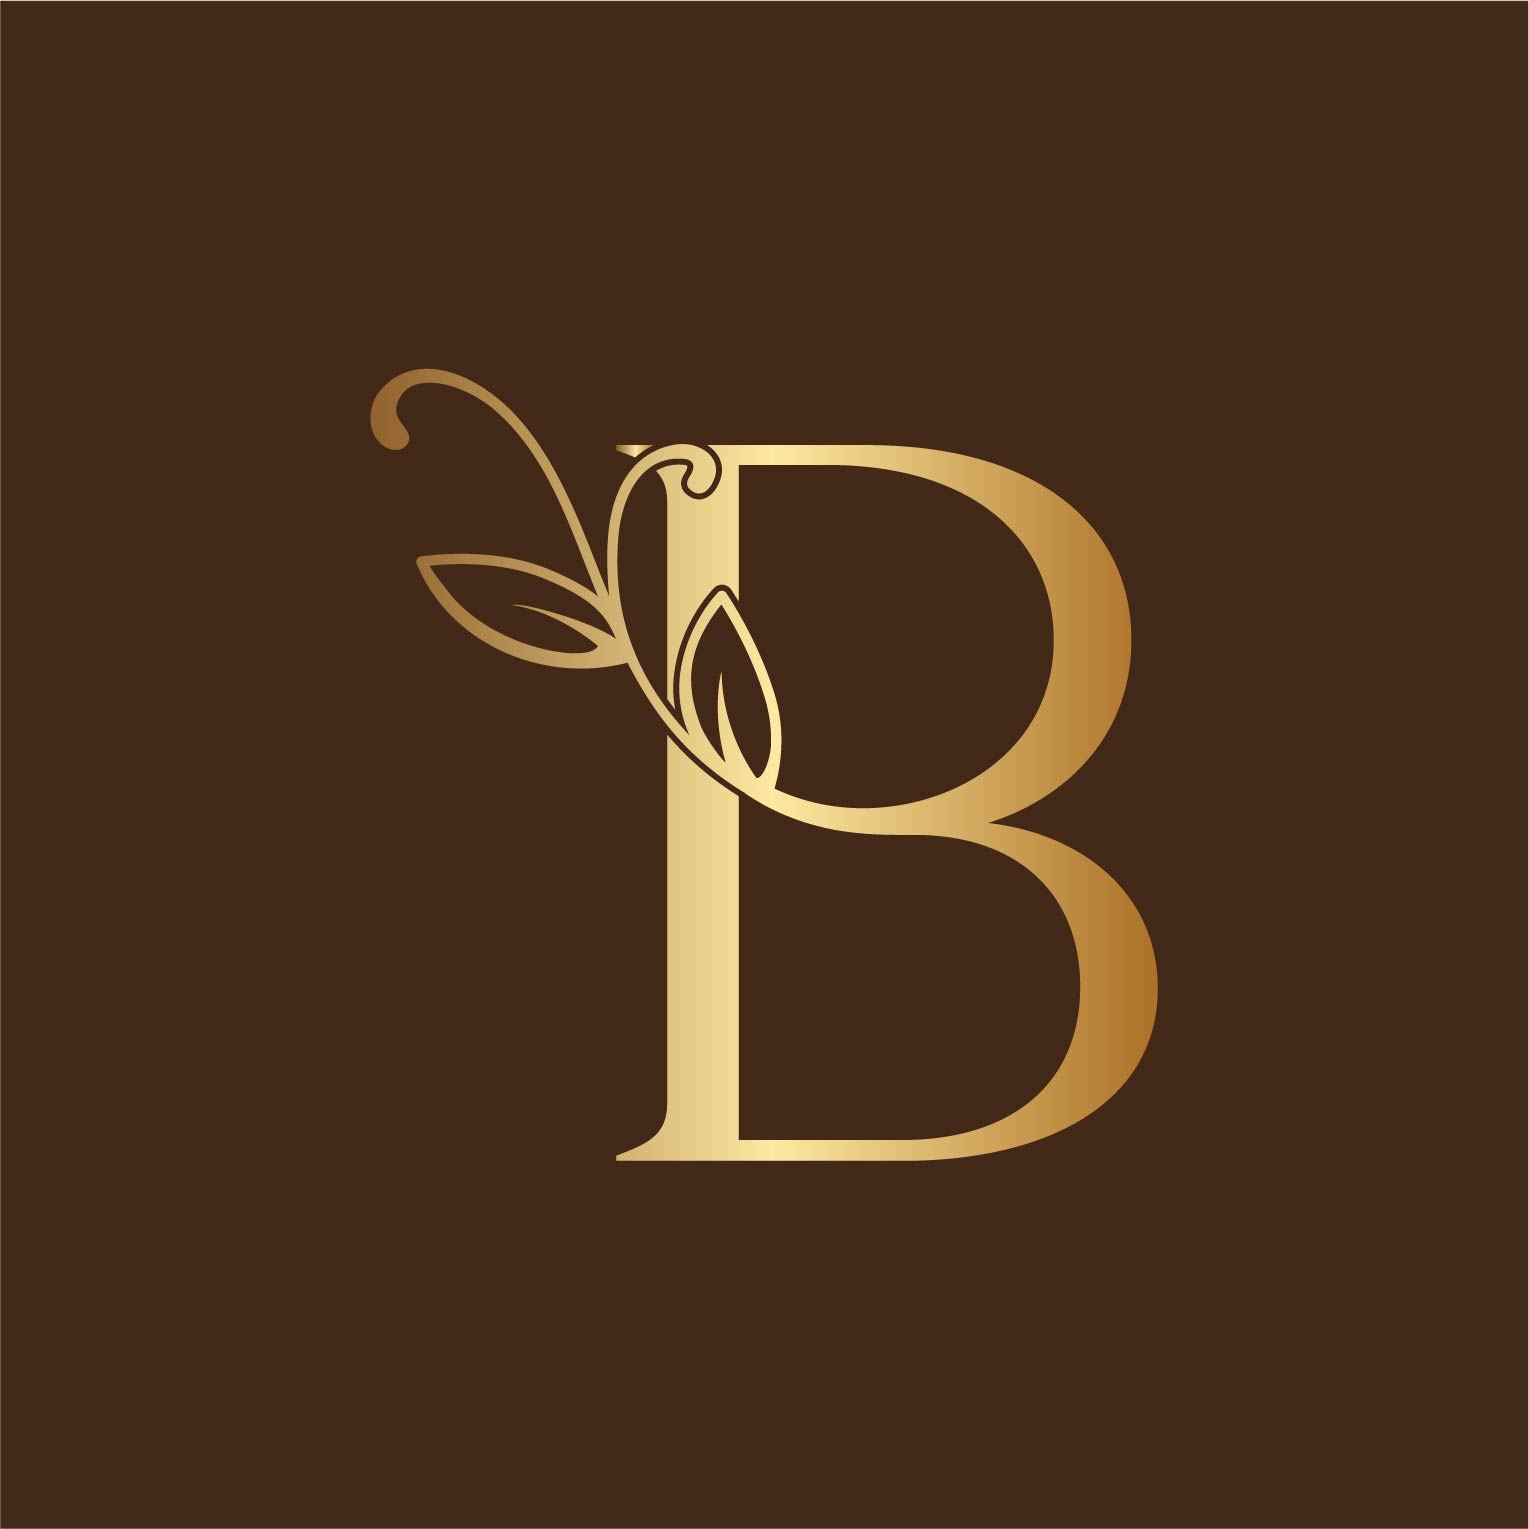 Floral Logo Design Letter B with brown background.